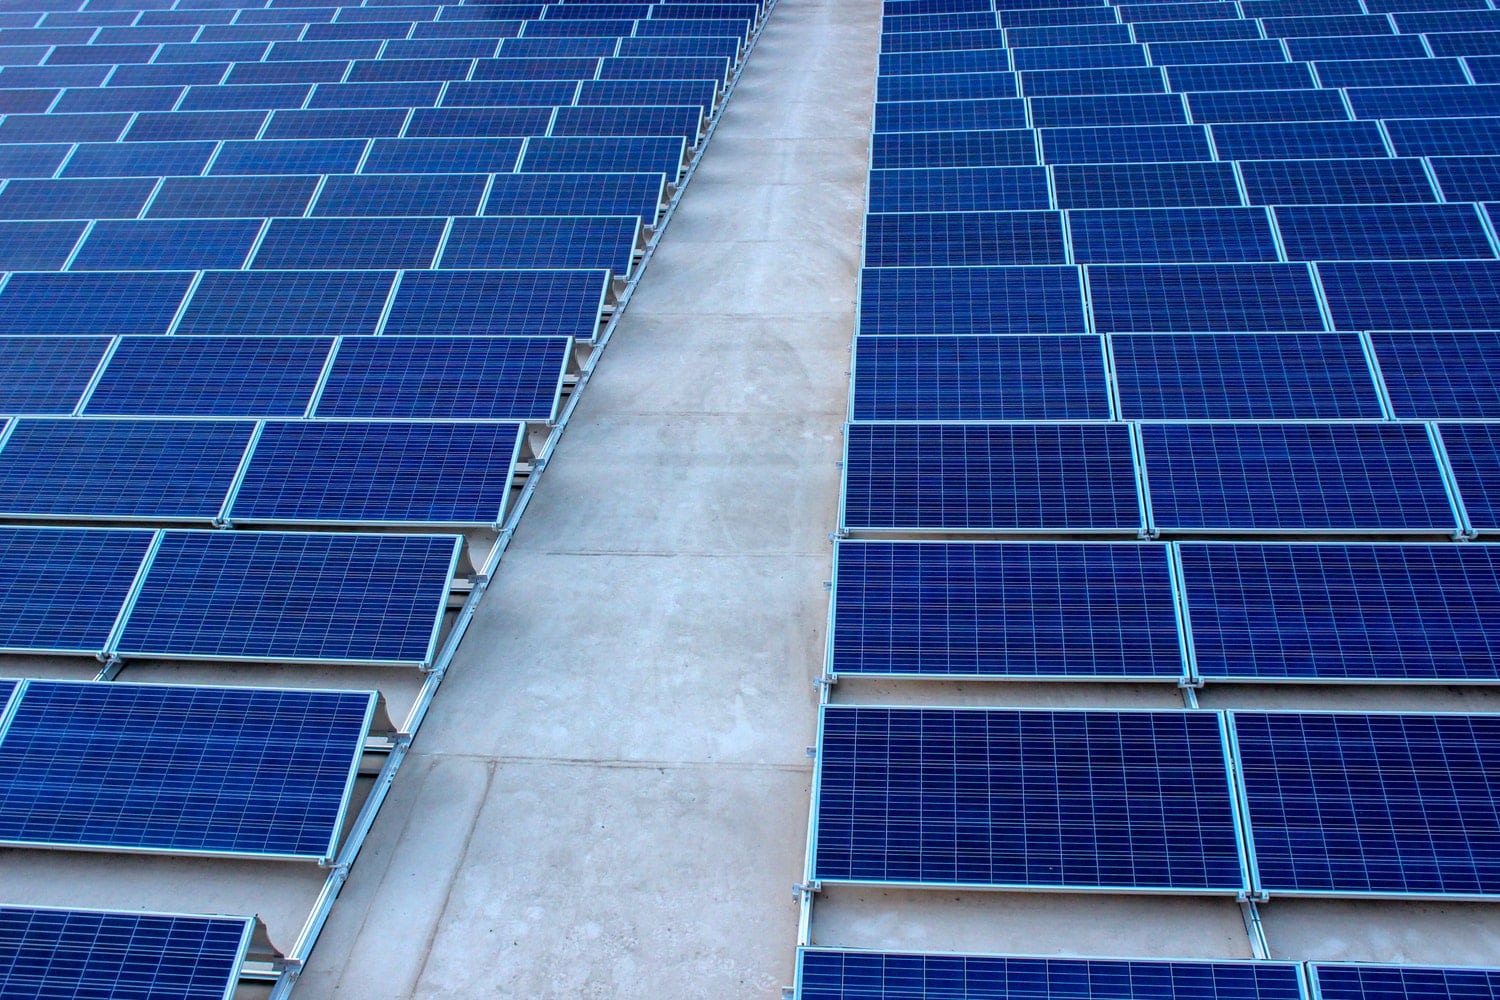 FPL Seeks Approval for Solar Subscription Program Following Customer Interest